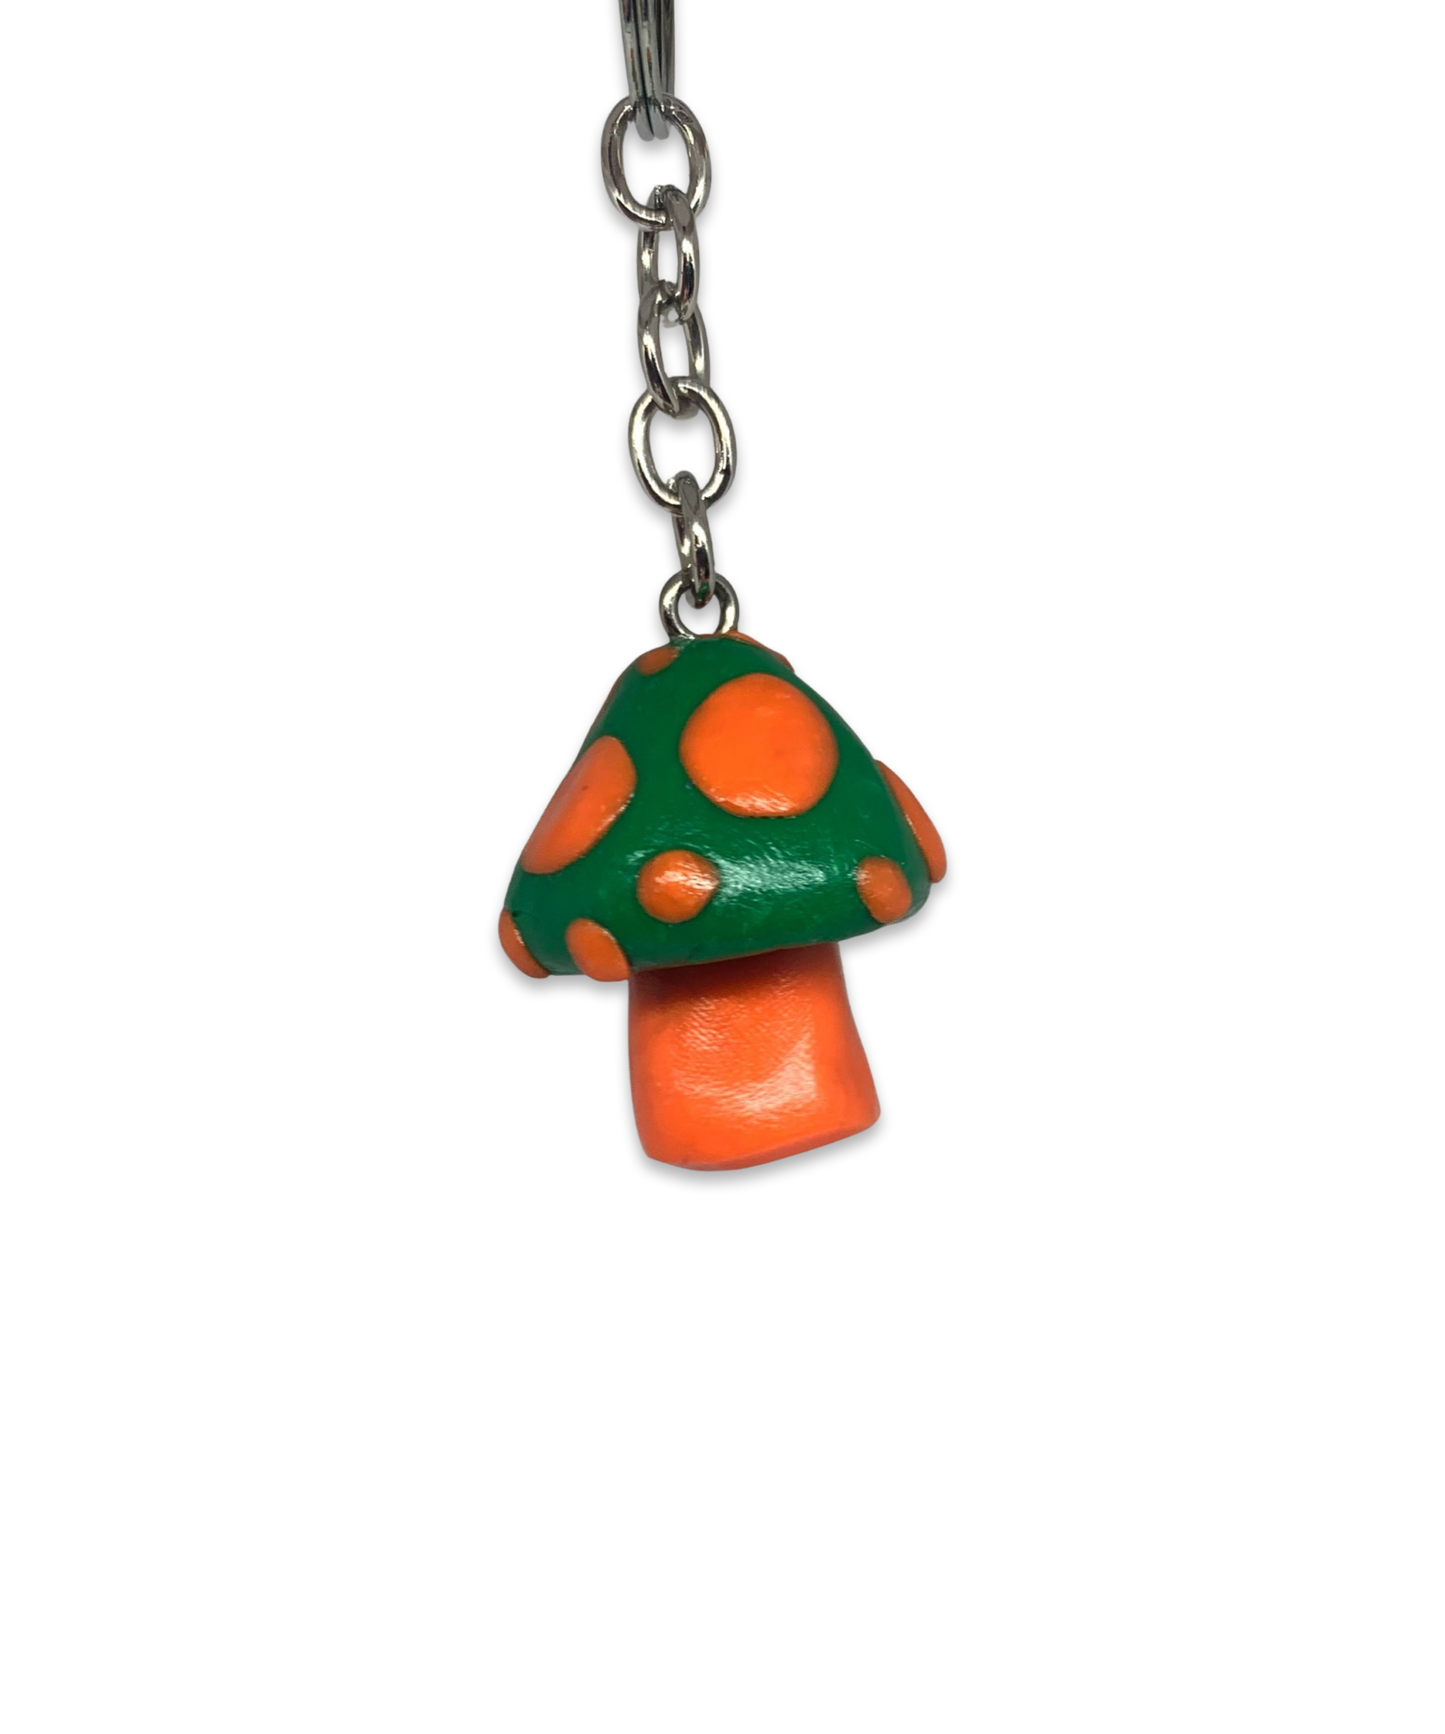 Green and Orange Mushroom Keychains, cartoon, stylized, cute, school colors, team colors, wildcard